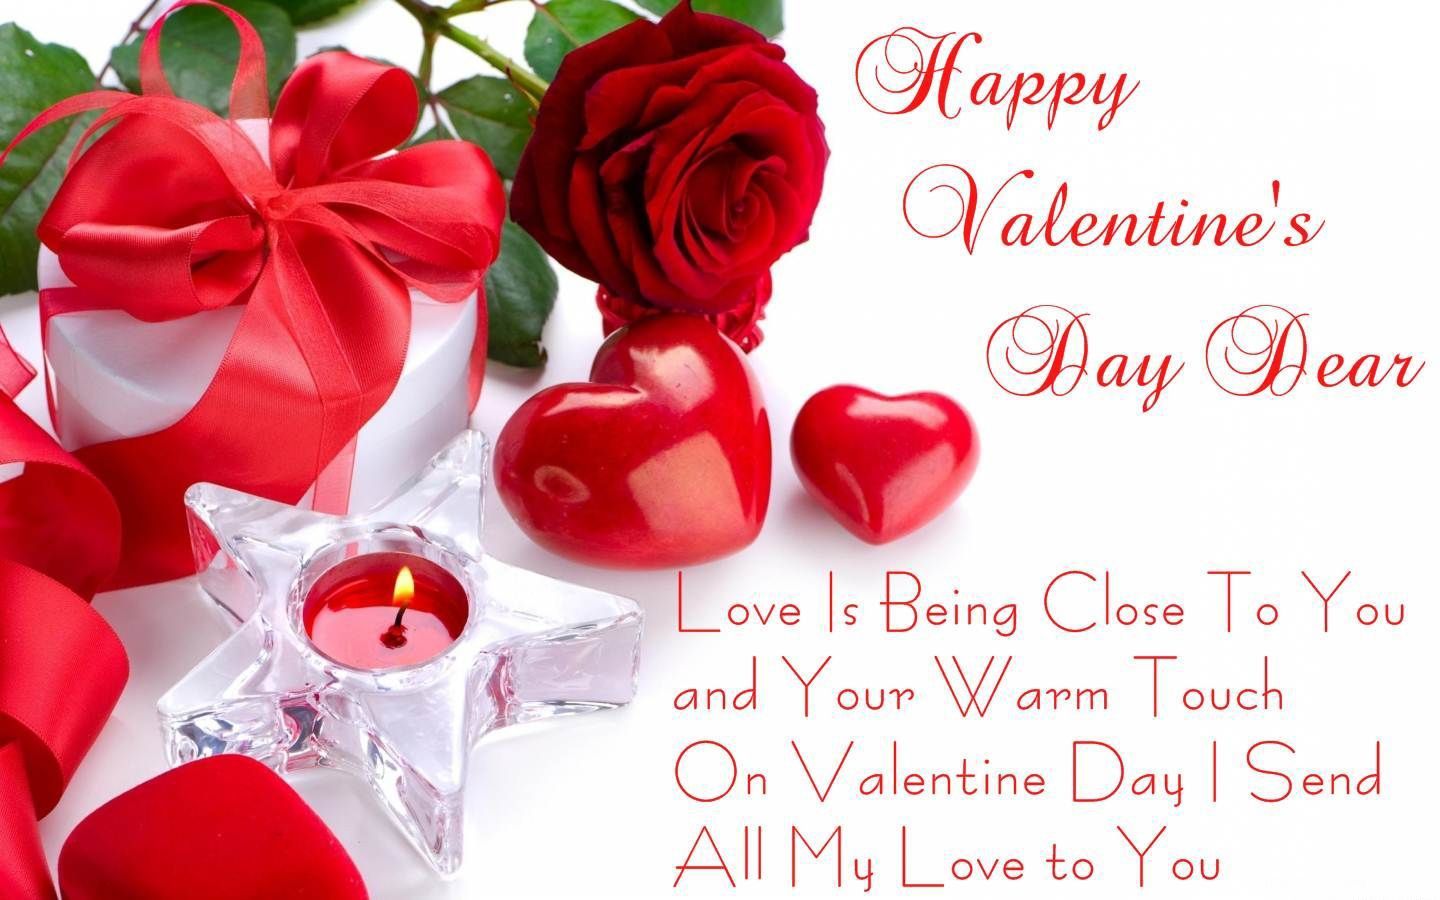 Happy Valentine's Day Image & Wallpaper 2016. Happy valentines day wishes, Happy valentine day quotes, Valentines day wishes